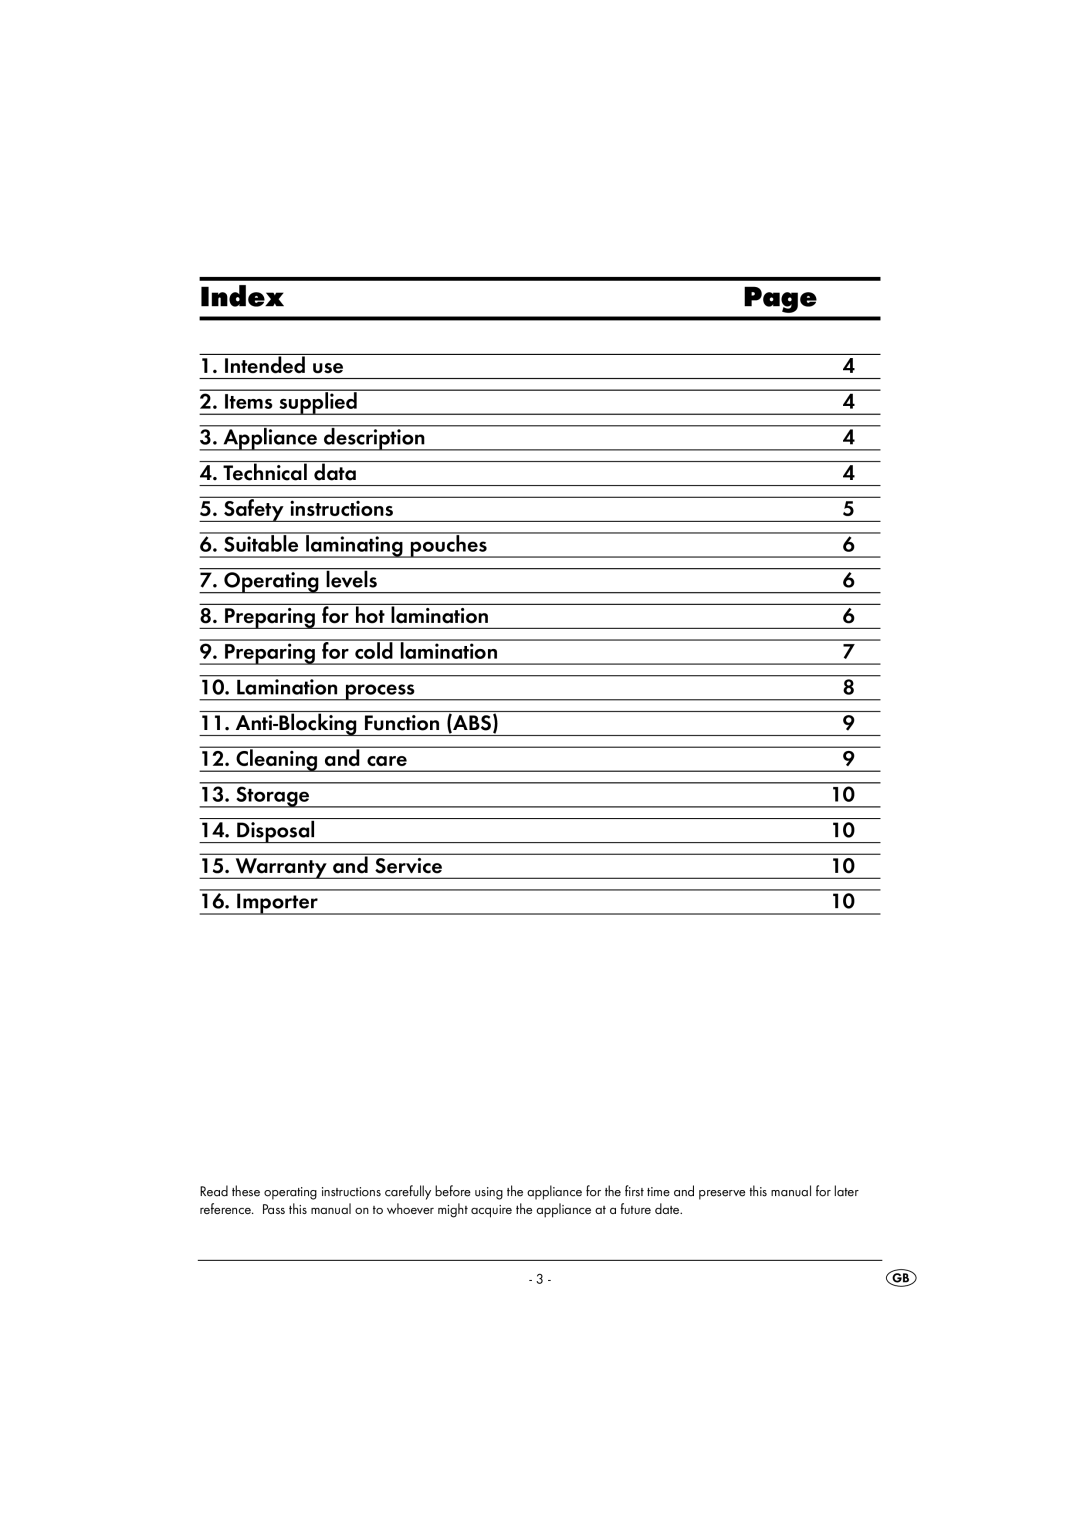 Kompernass KH 4412 manual Index, Page 